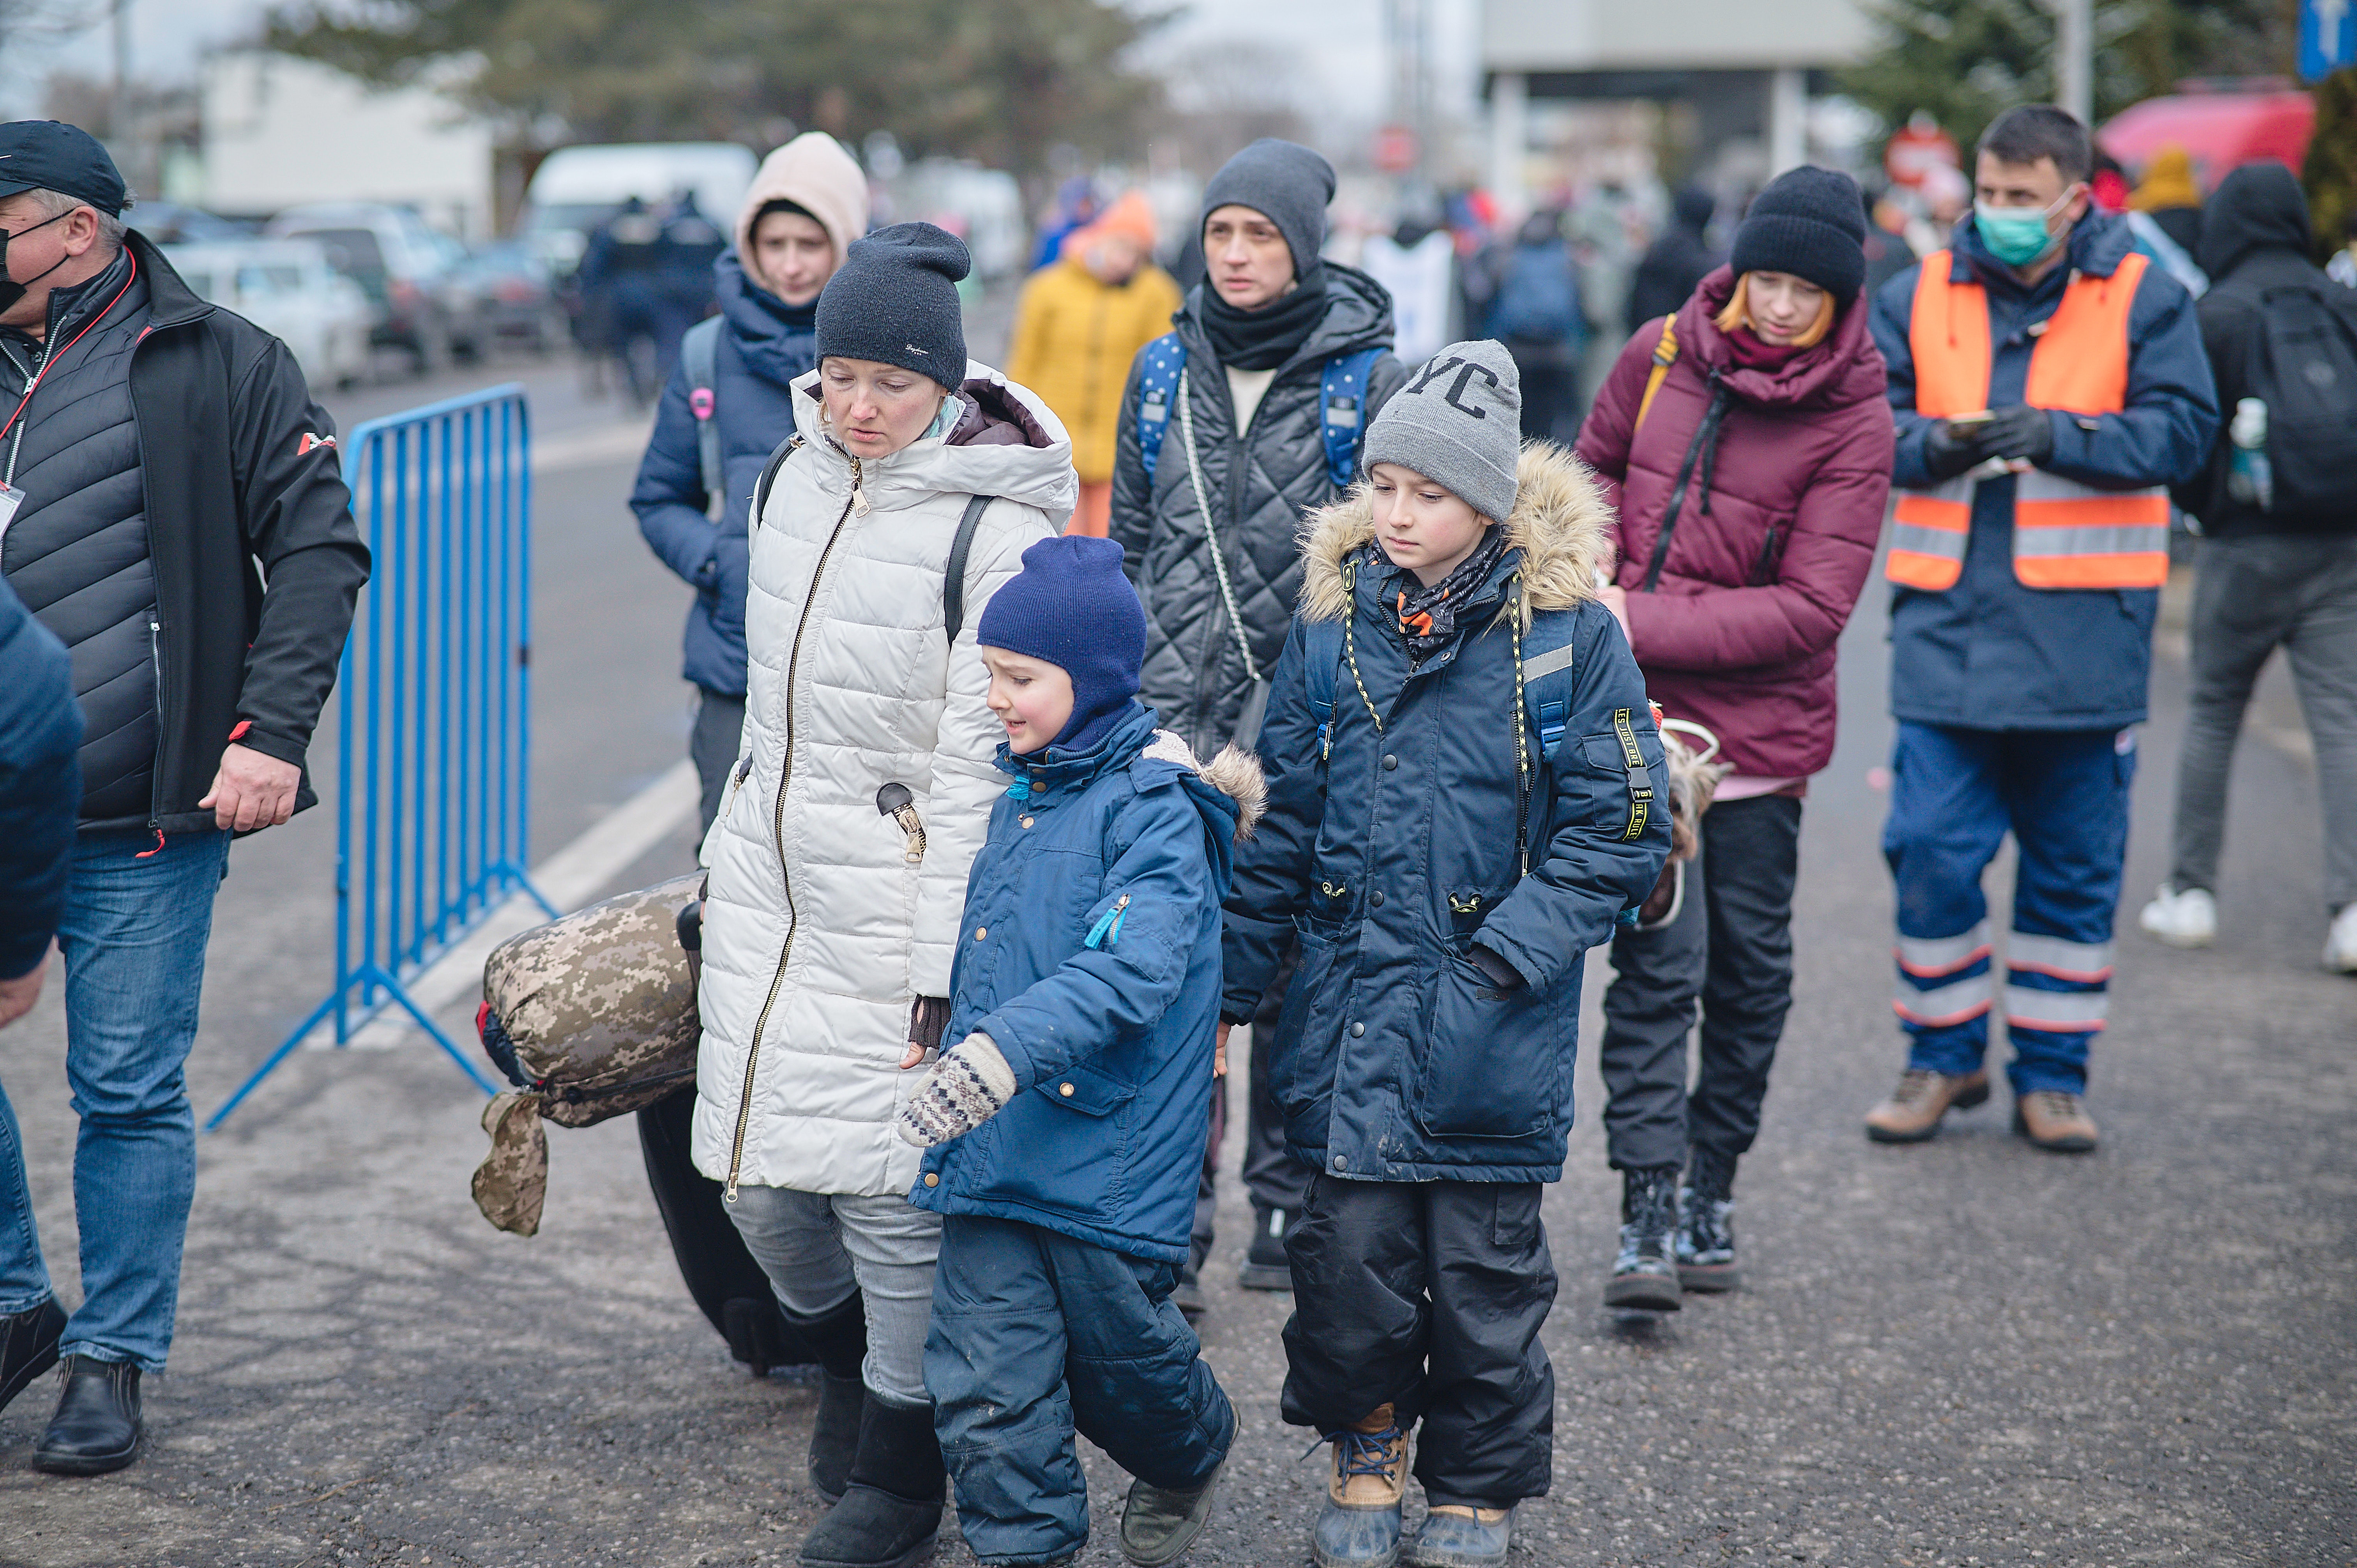 Ukrainian refugee women and children